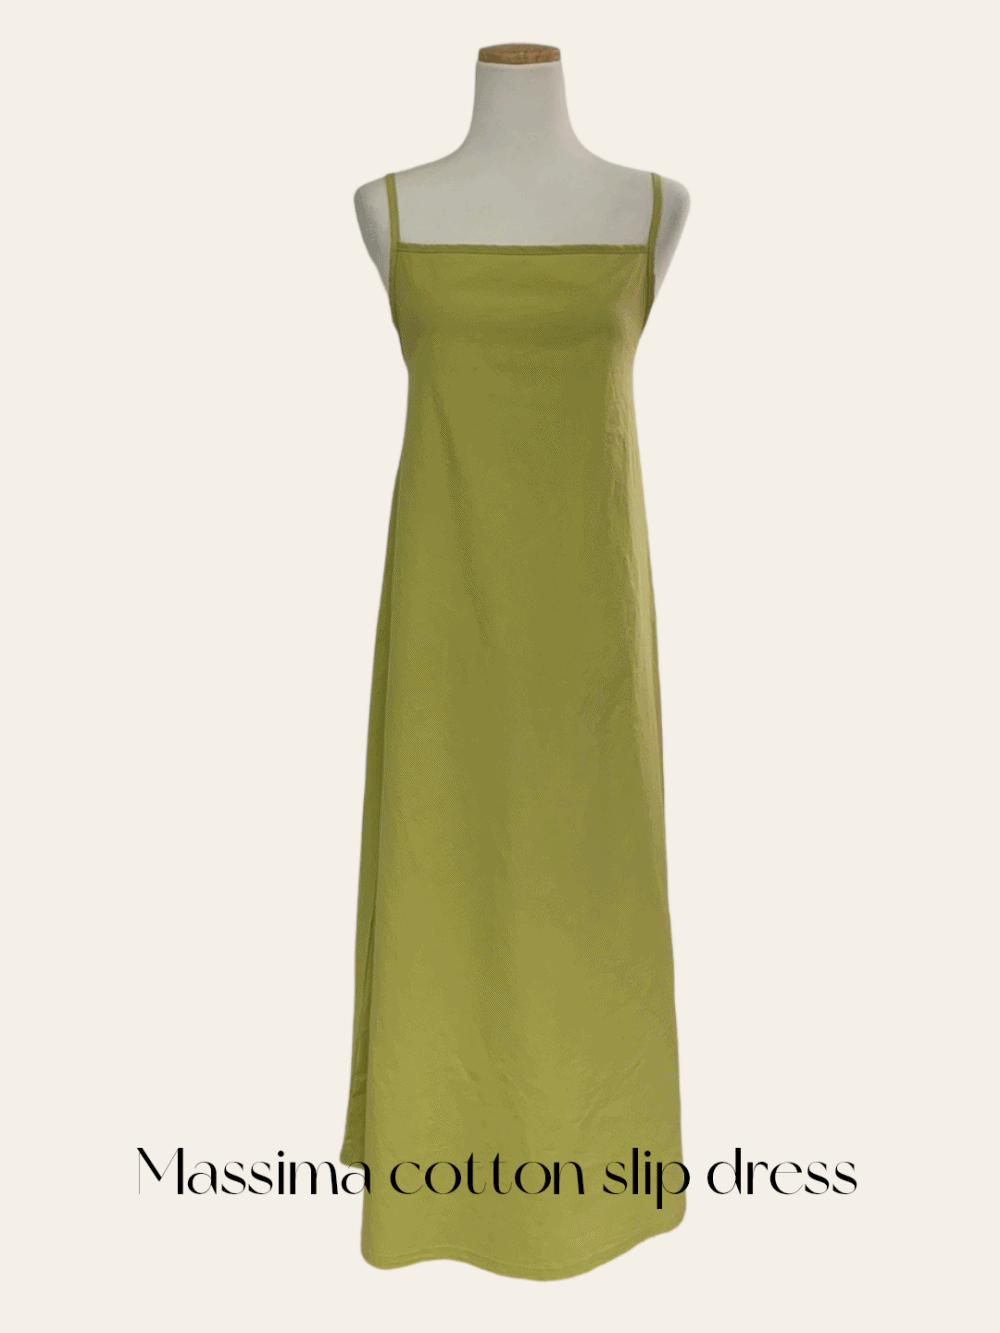 [Dress] Massima cotton slip dress / 5 colors